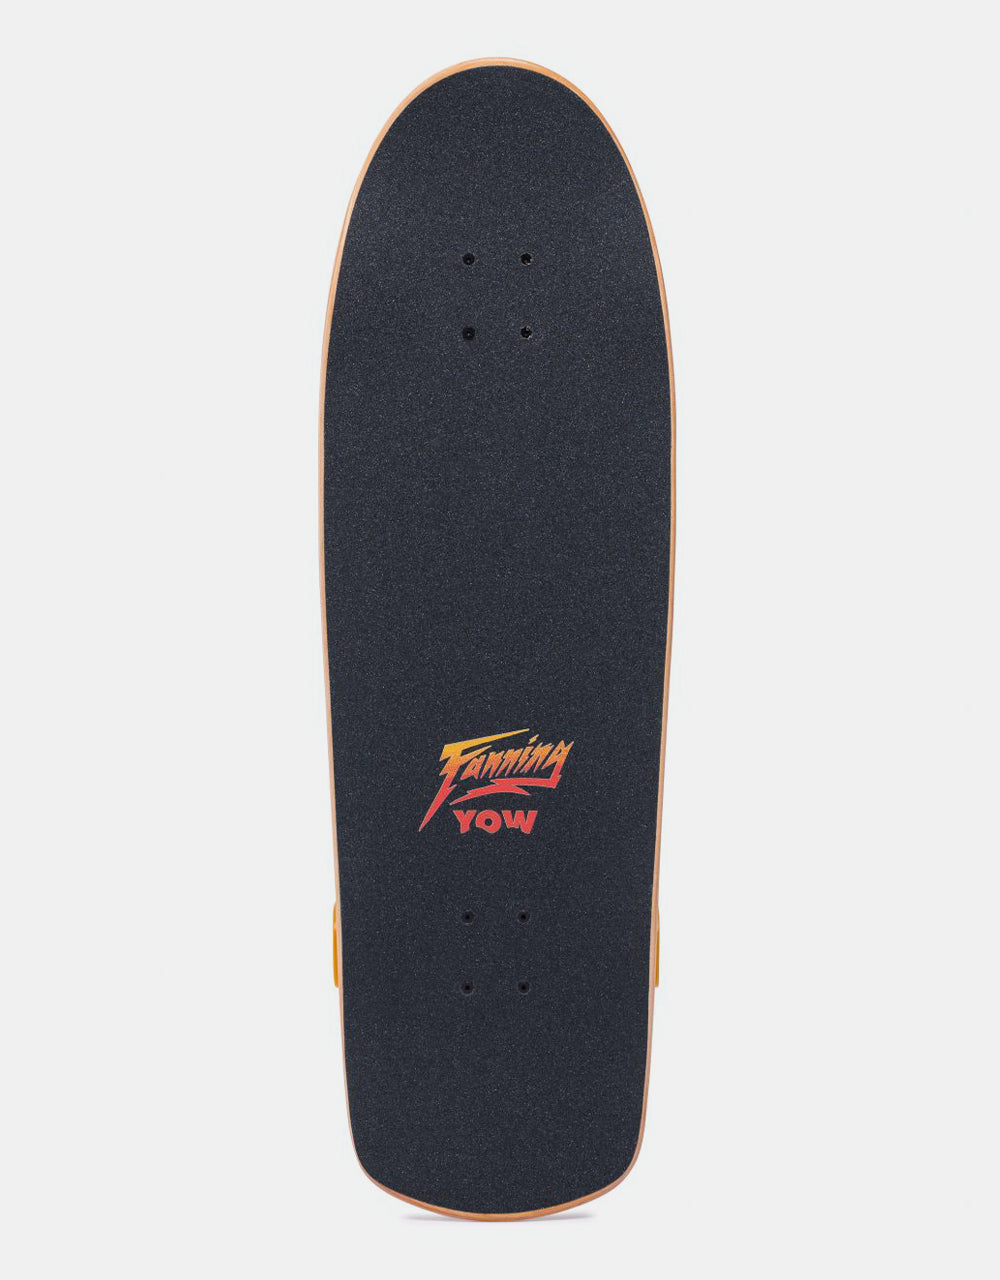 YOW Fanning Falcon SurfSkate Cruiser Skateboard - 10.25" x 33.5"